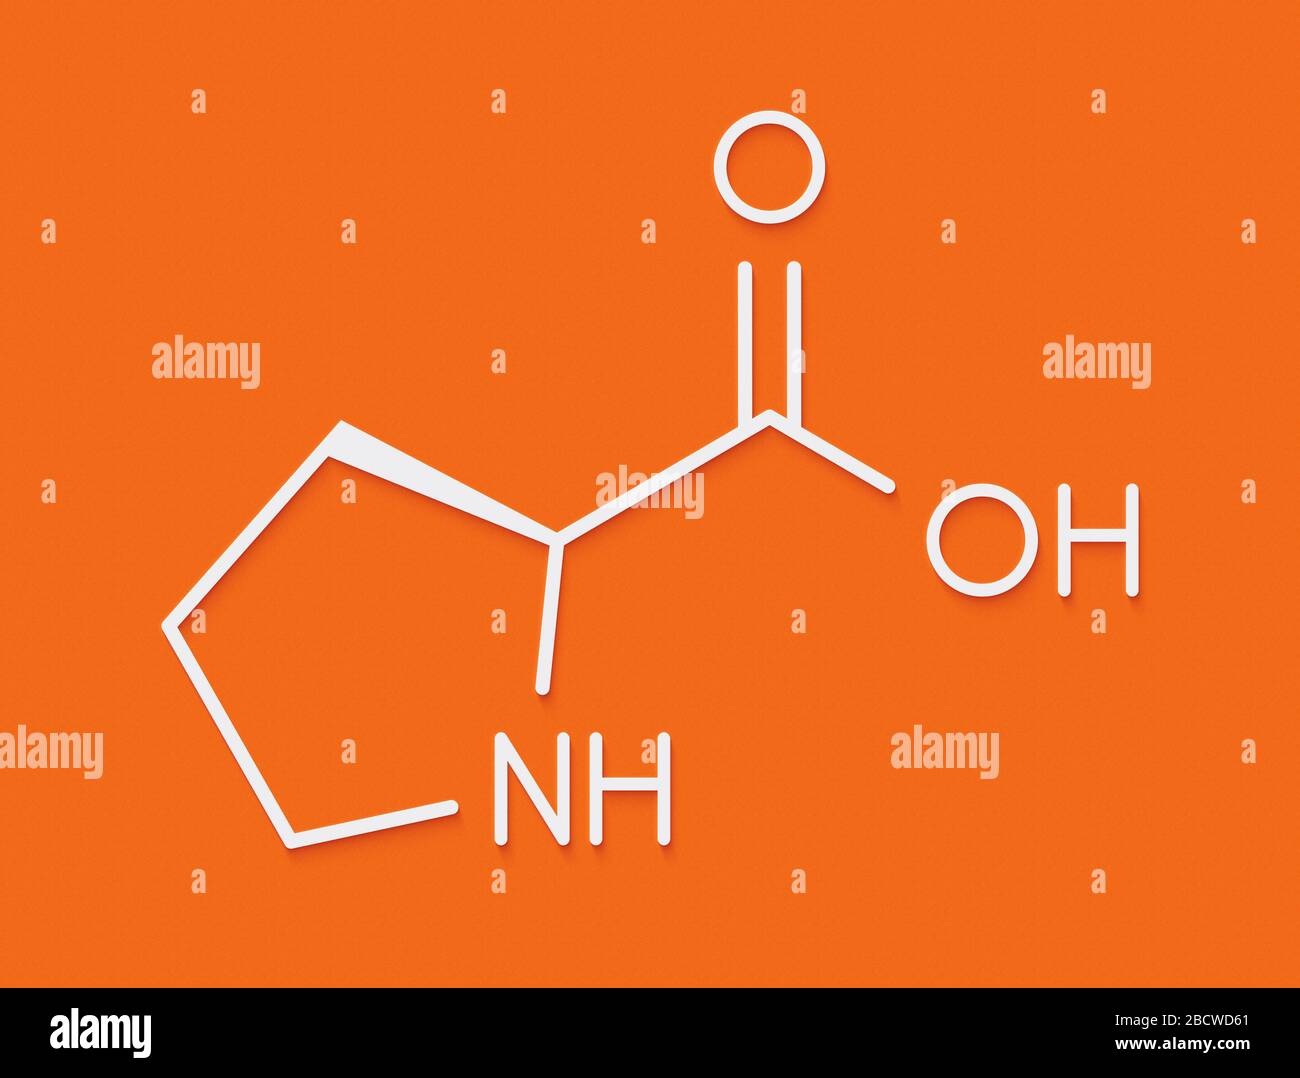 Proline (l-proline, Pro) amino acid molecule. Skeletal formula. Stock Photo